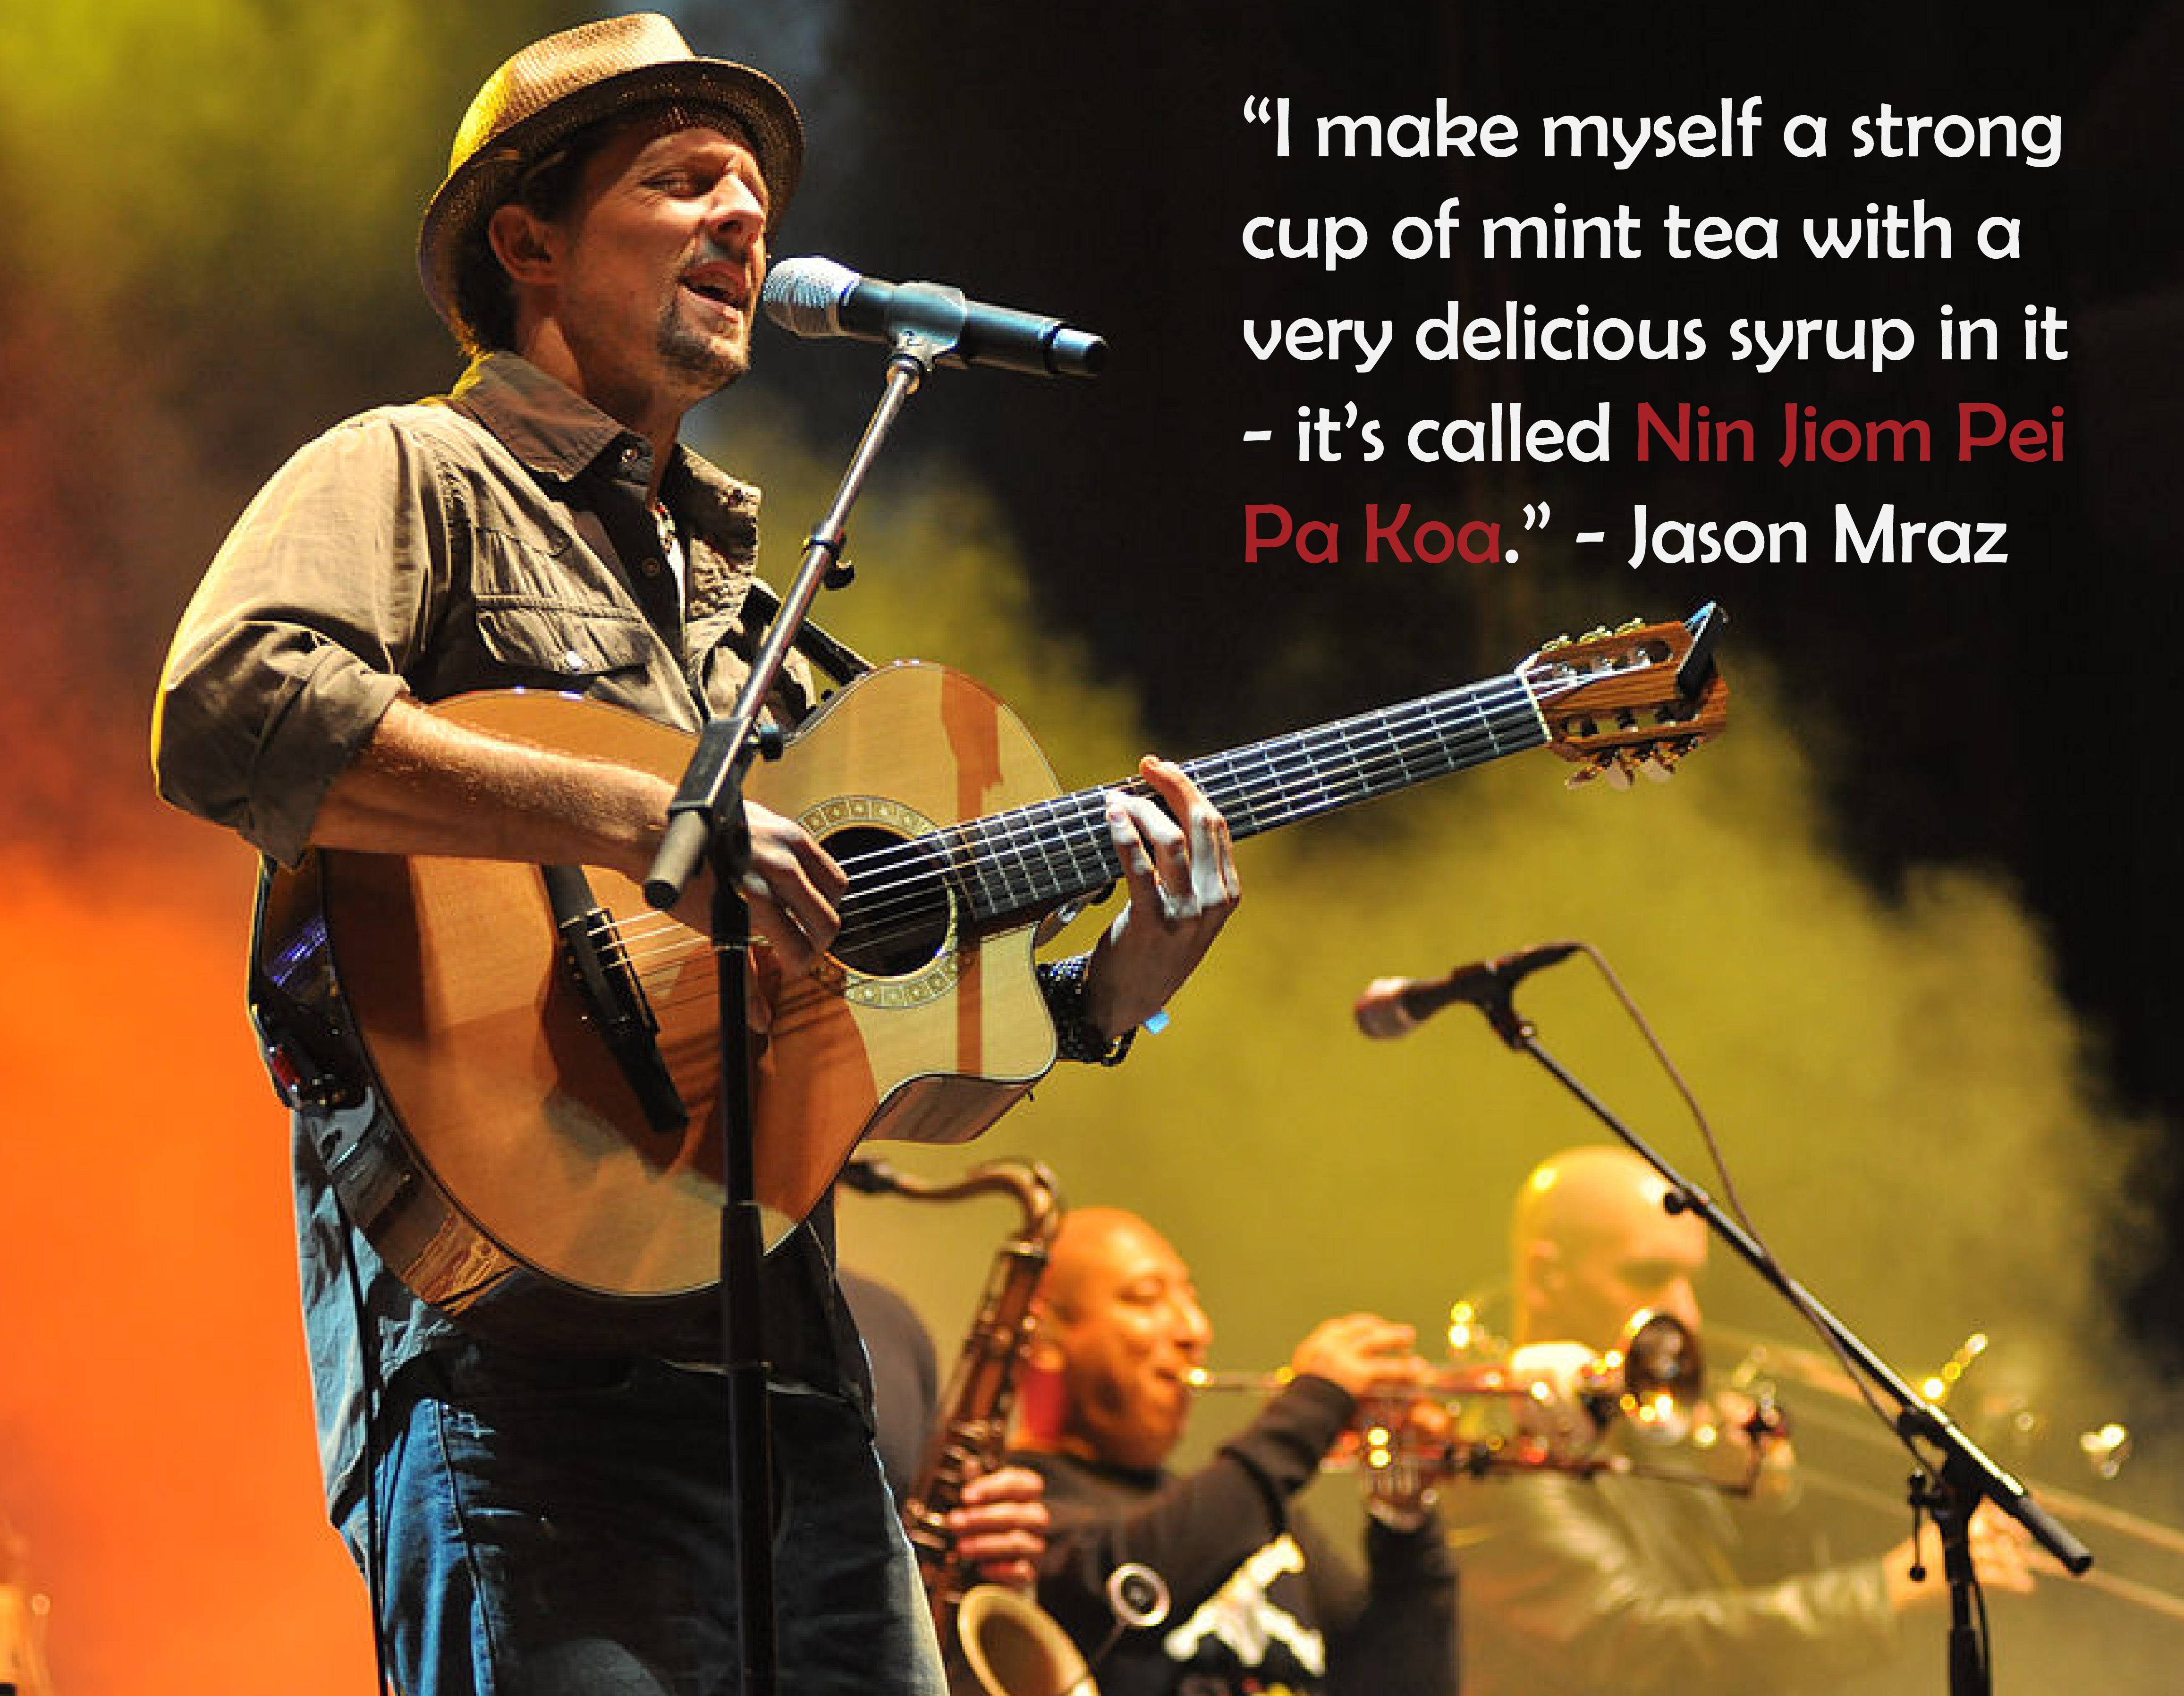 Jason Mraz, lauréat d'un Grammy, se réchauffe avec Nin Jiom Pei Pa Koa